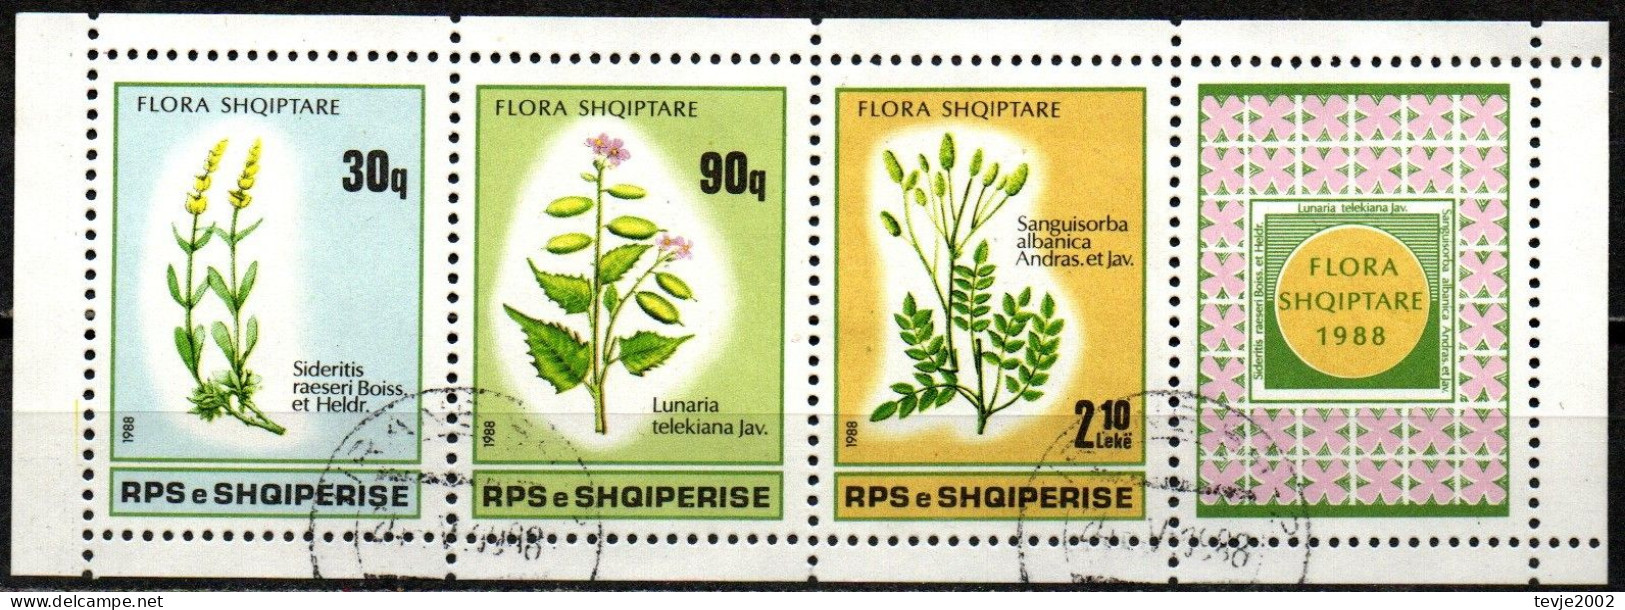 Albanien 1988 - Mi.Nr. 2358 - 2360 - Gestempelt Used - Blumen Flowers - Albanien